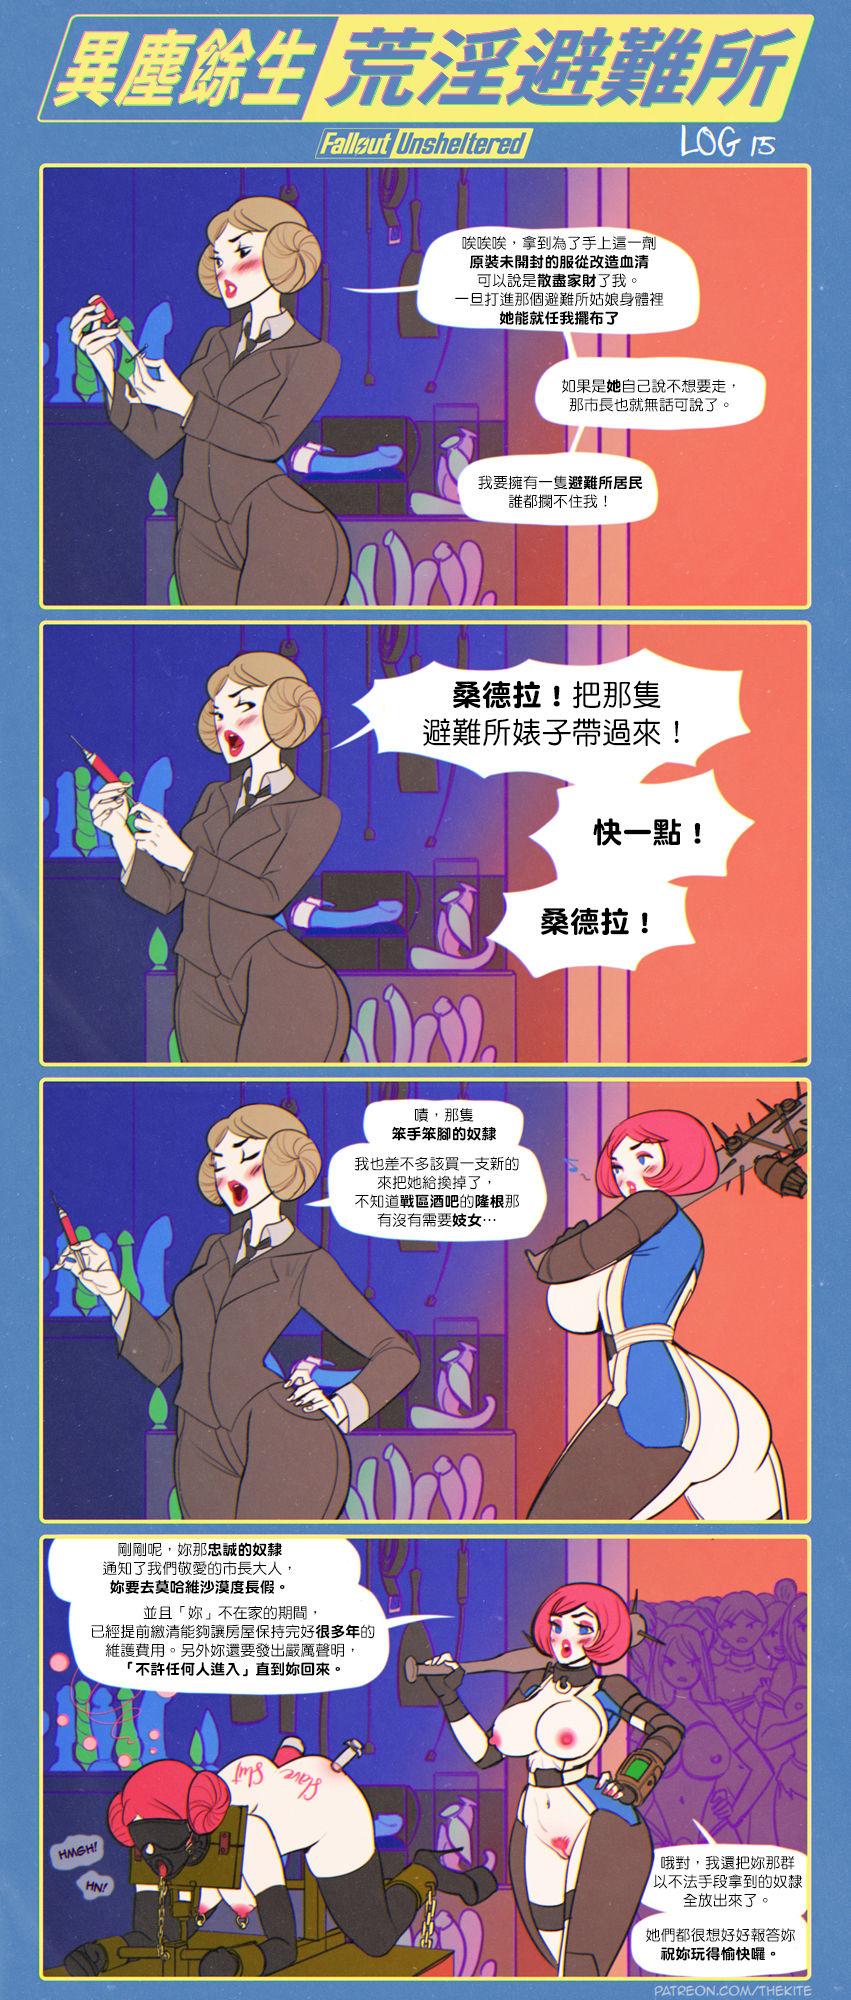 Stretch 異塵餘生 荒淫避難所 - Fallout Masturbando - Page 19